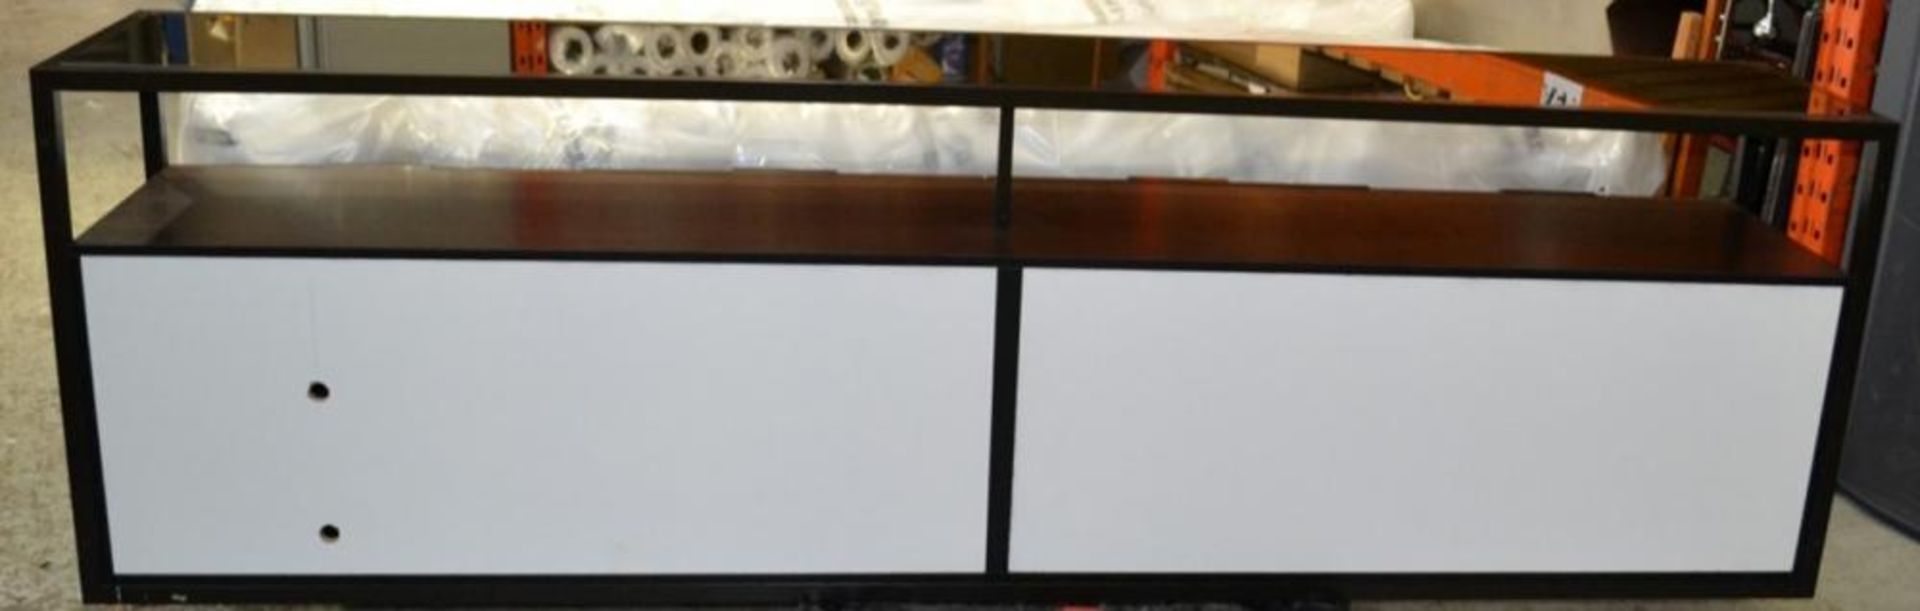 1 x LIGNE ROSET 4-Door Dedicato Sideboard - Designed By Didier Gomez - Dimensions: W250 x D45 x H75c - Image 10 of 11